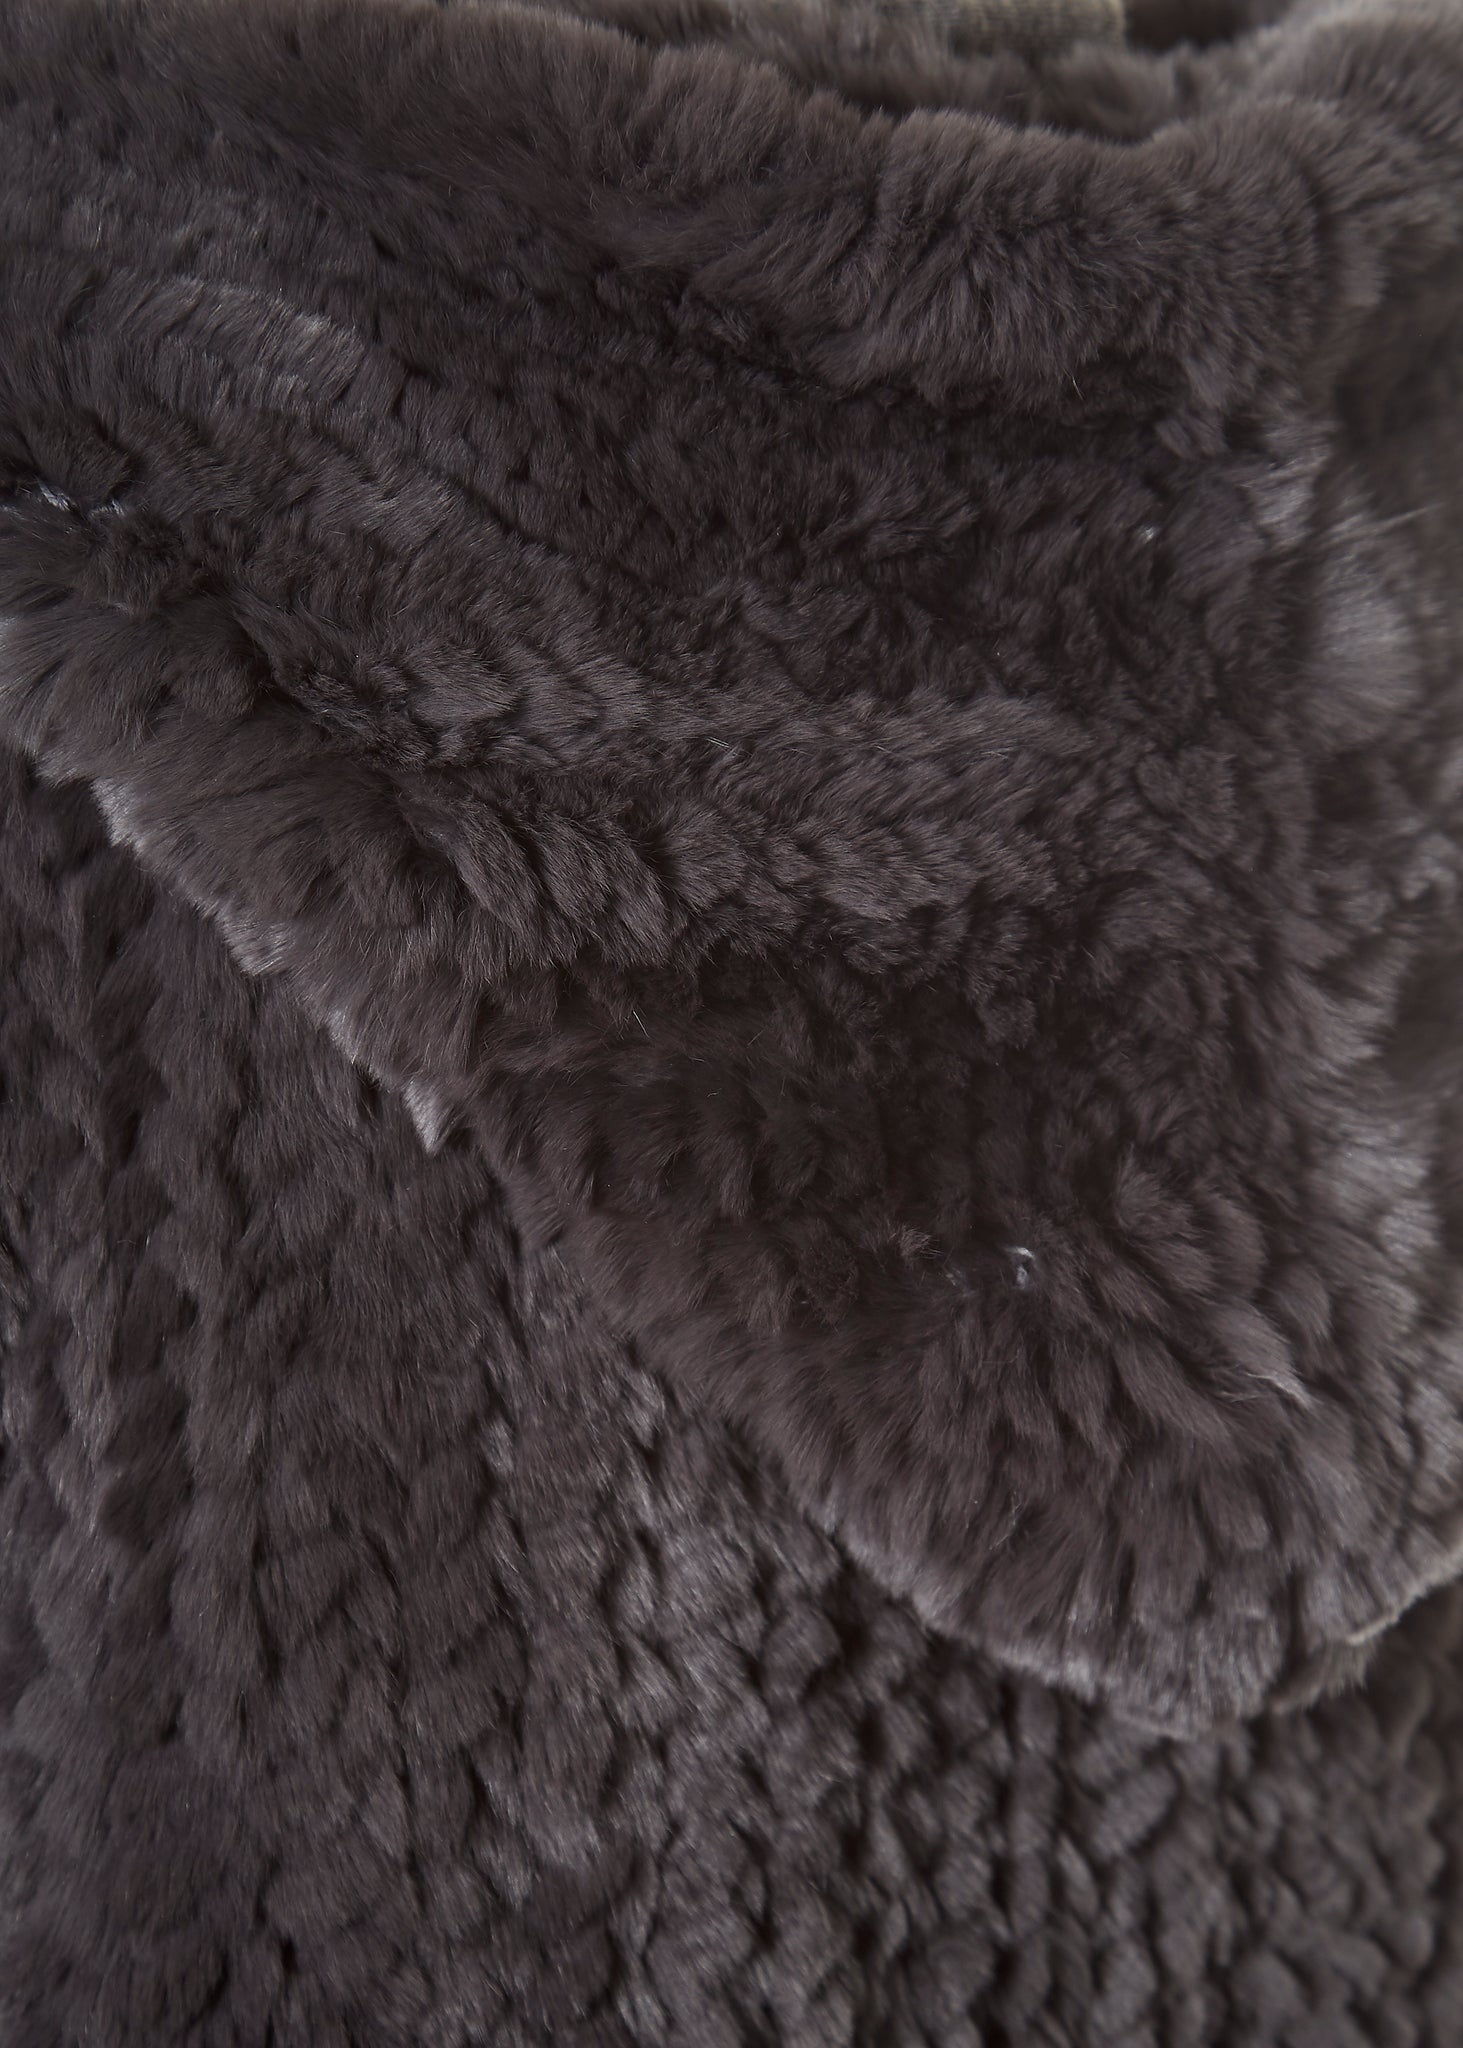 Dark Grey Long Hooded Asymmetric Knitted Rex Rabbit Jacket - Jessimara